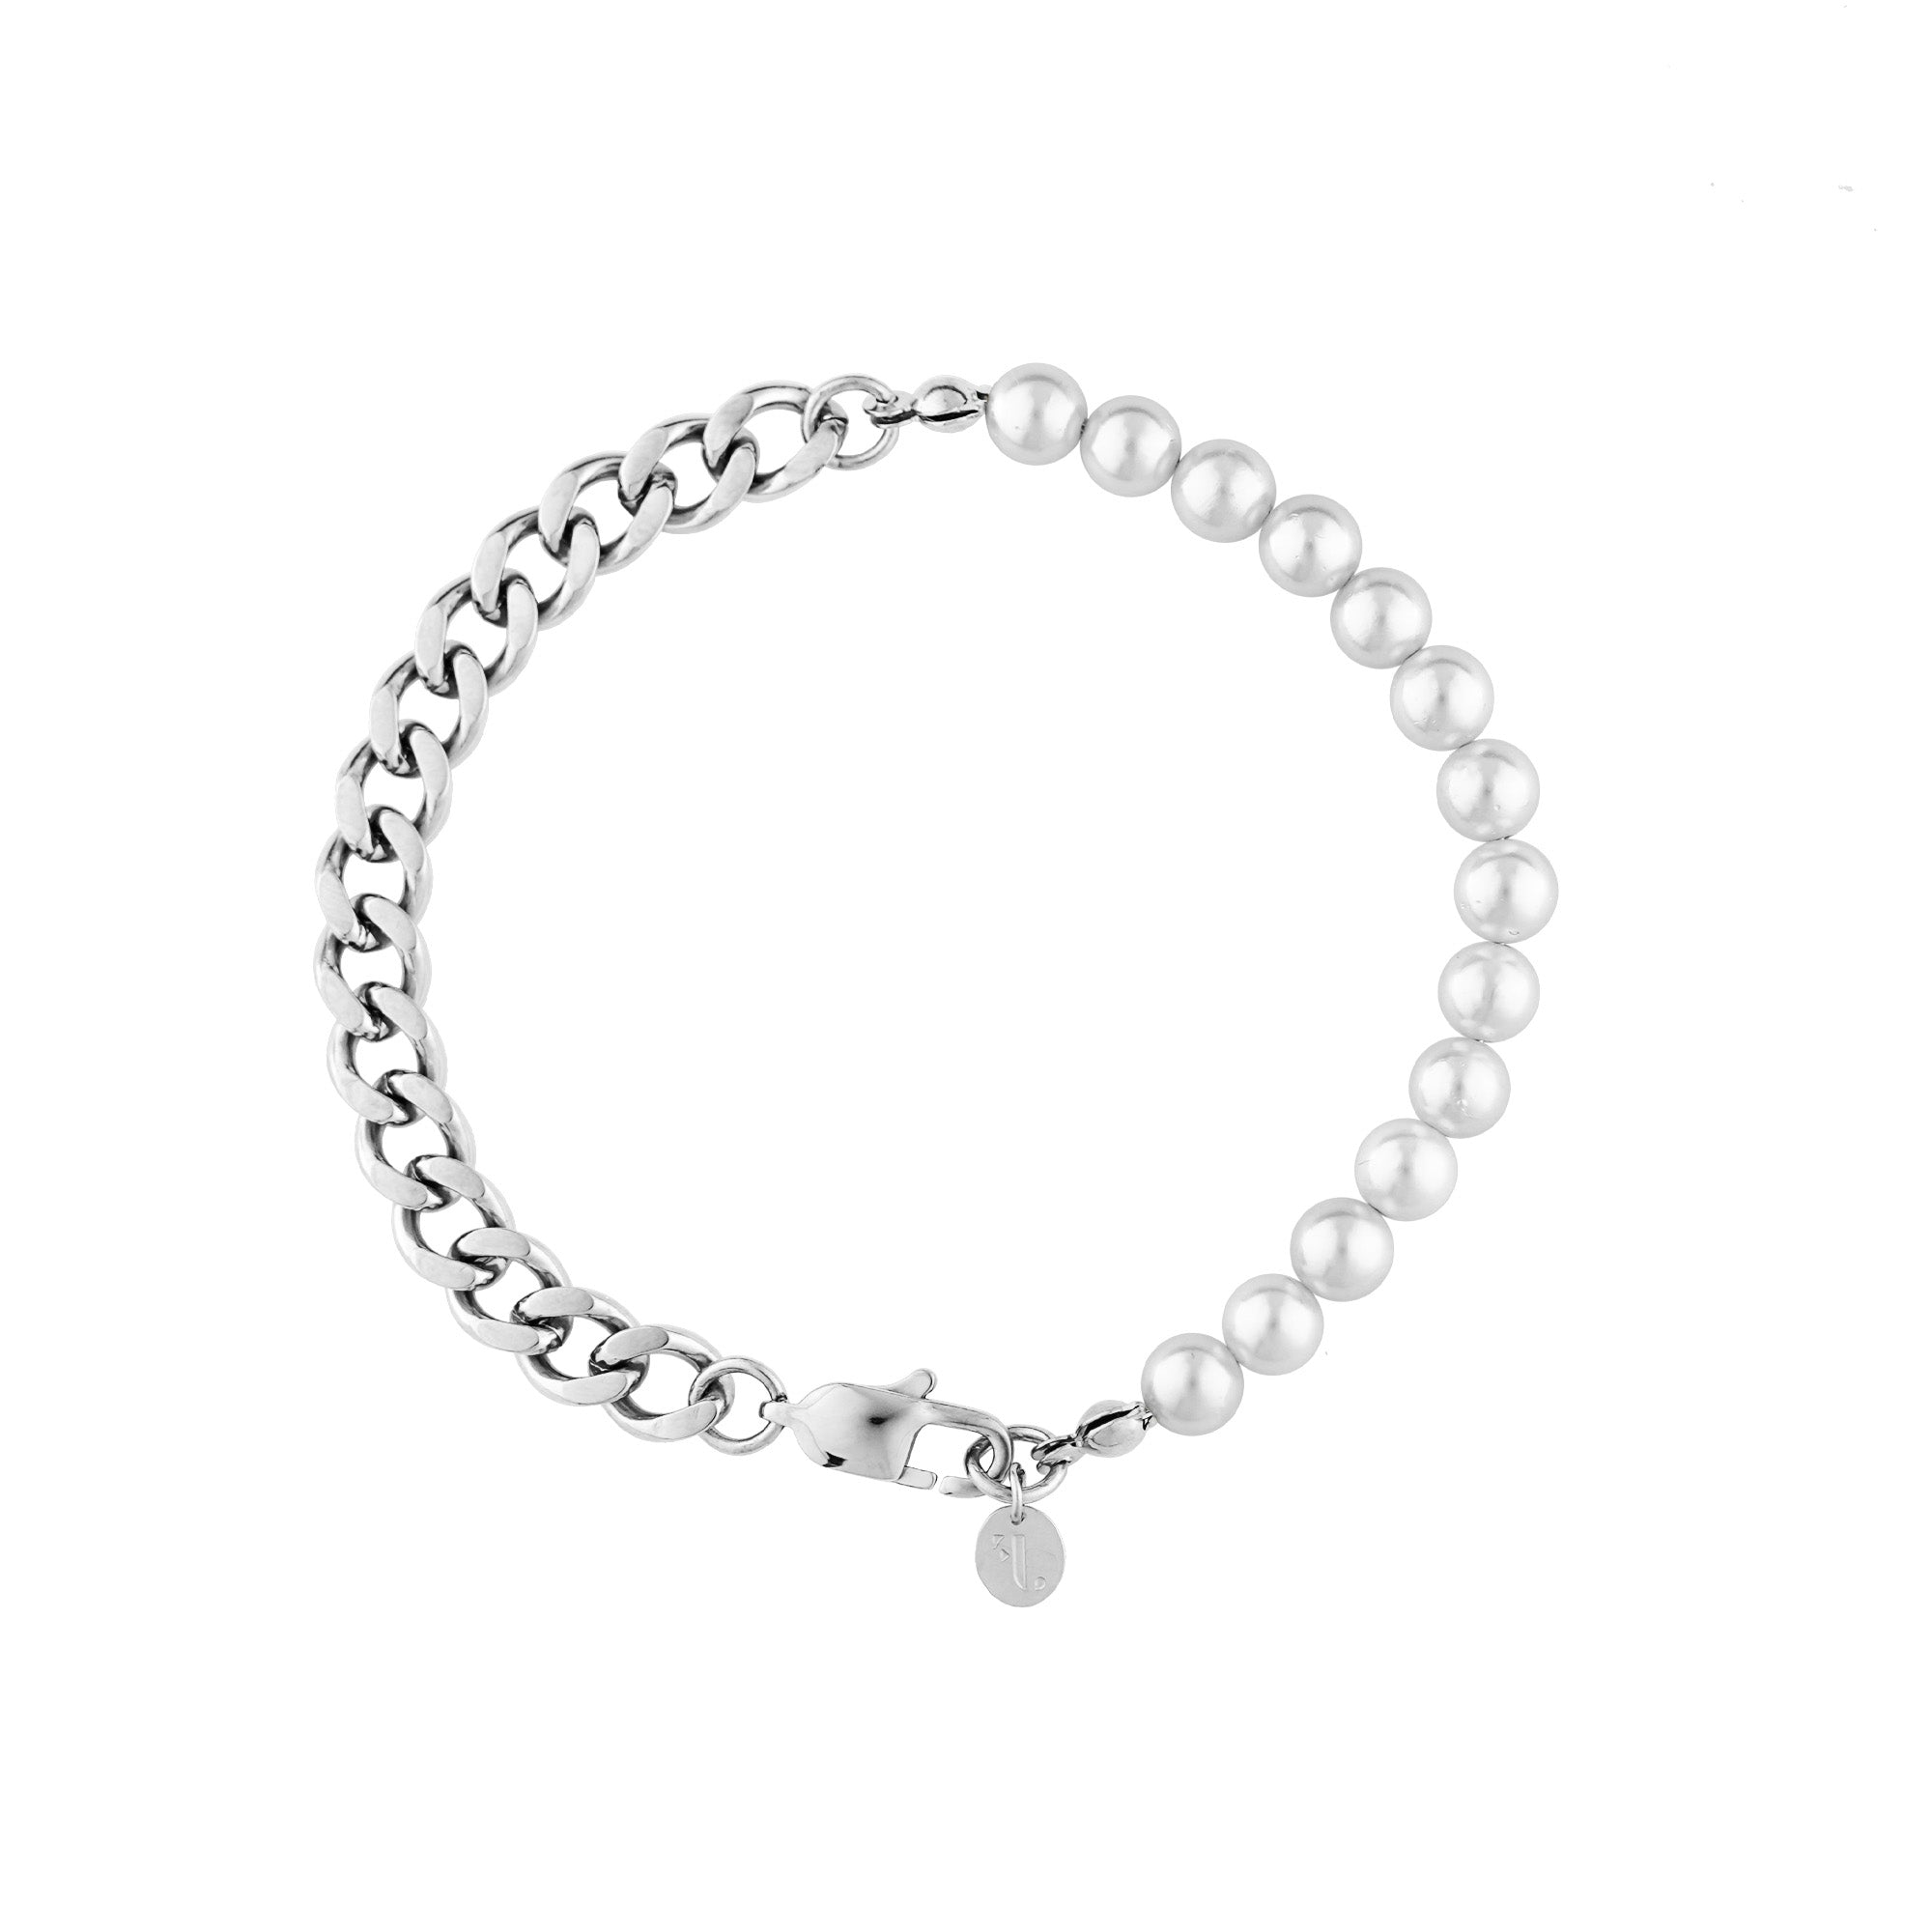 FJ Watches volga half bracelet silver women men bead white stainless steel